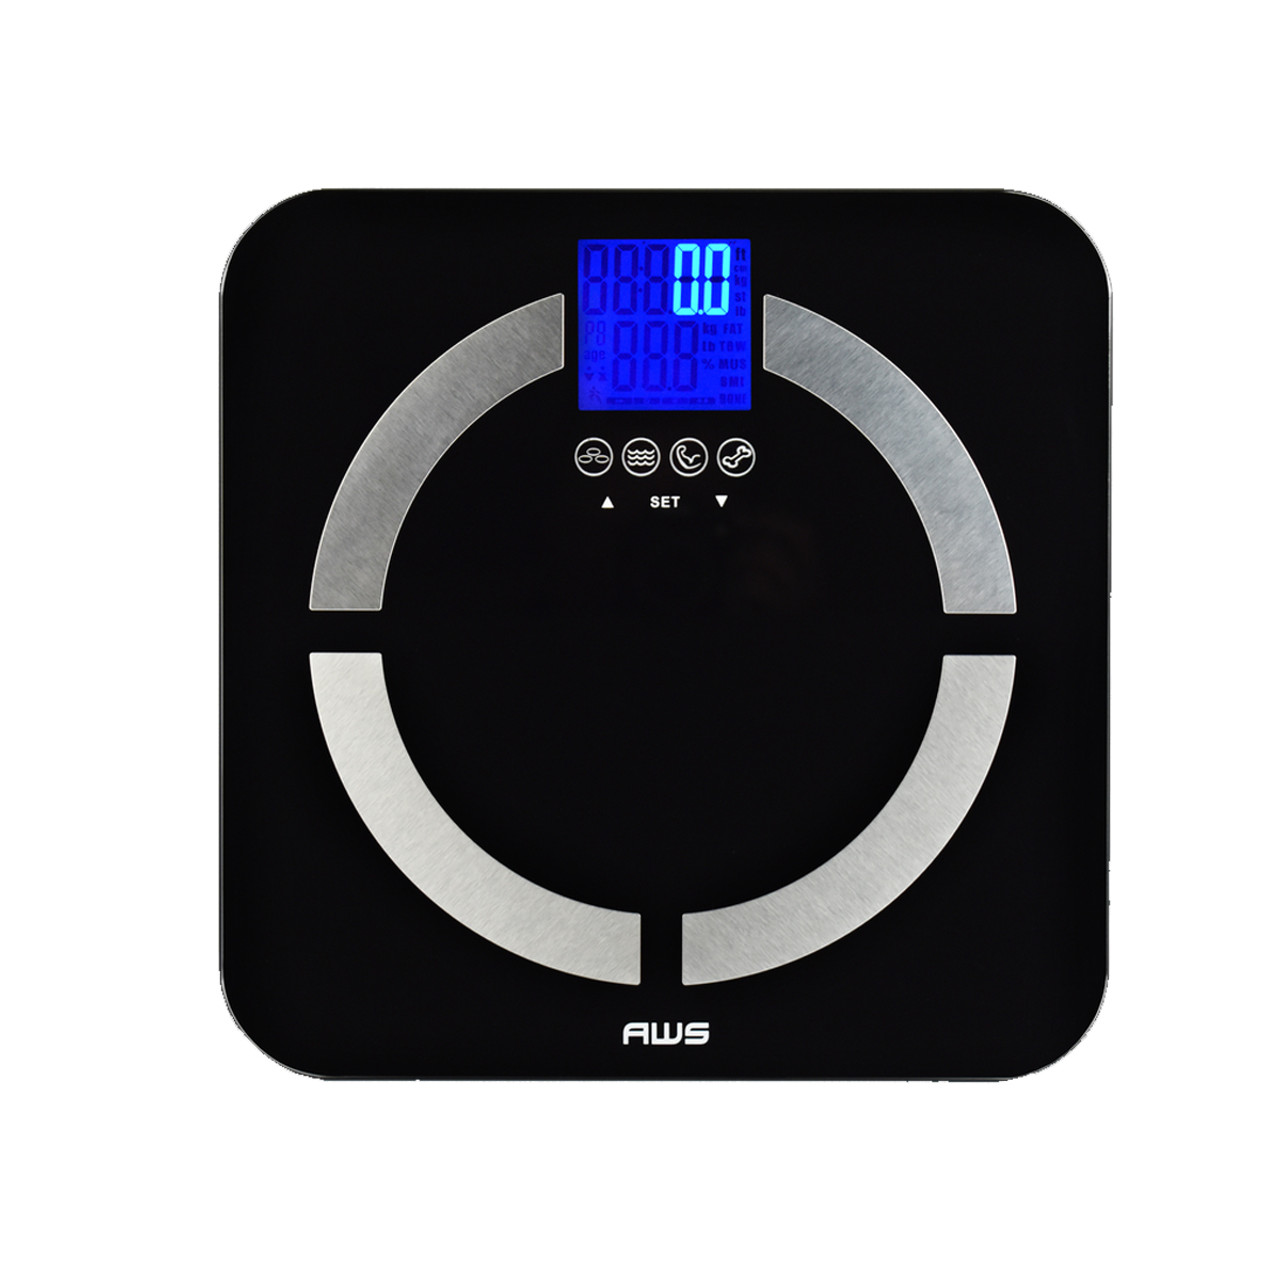 QUANTUM-2K DIGITAL BMI BATHROOM SCALE 330LBS - American Weigh Scales